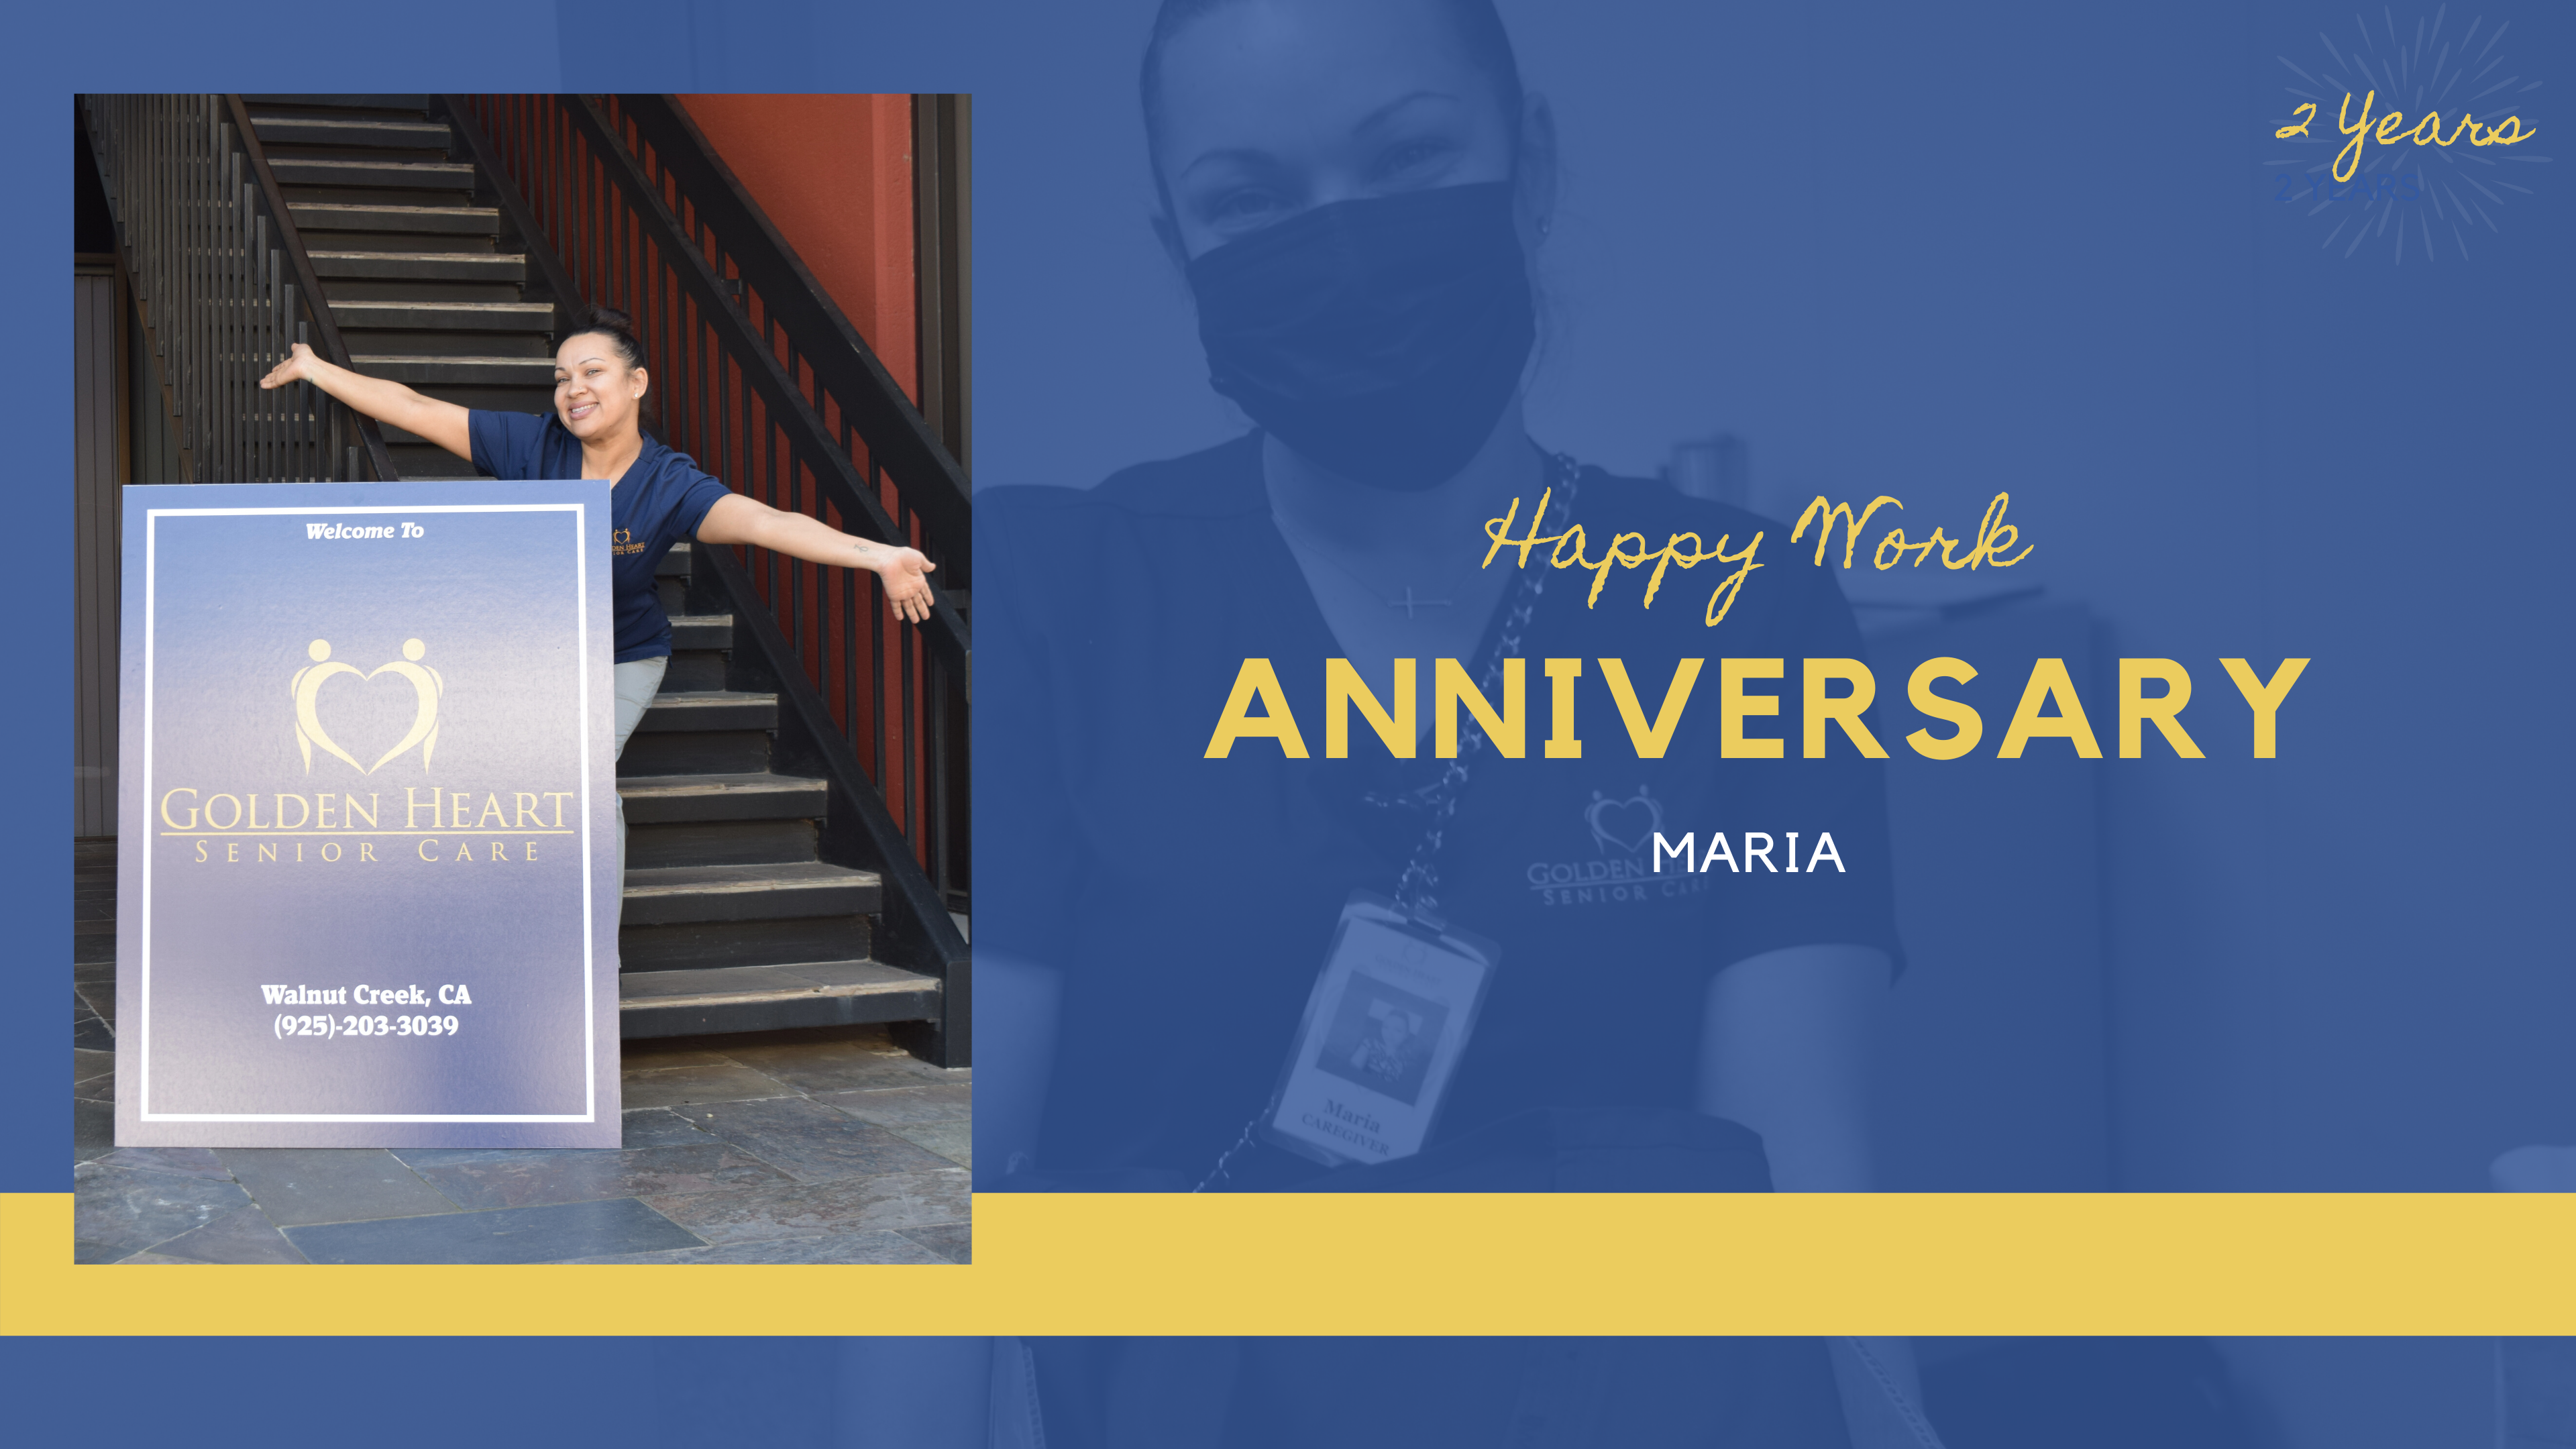 Happy Work Anniversary Maria!